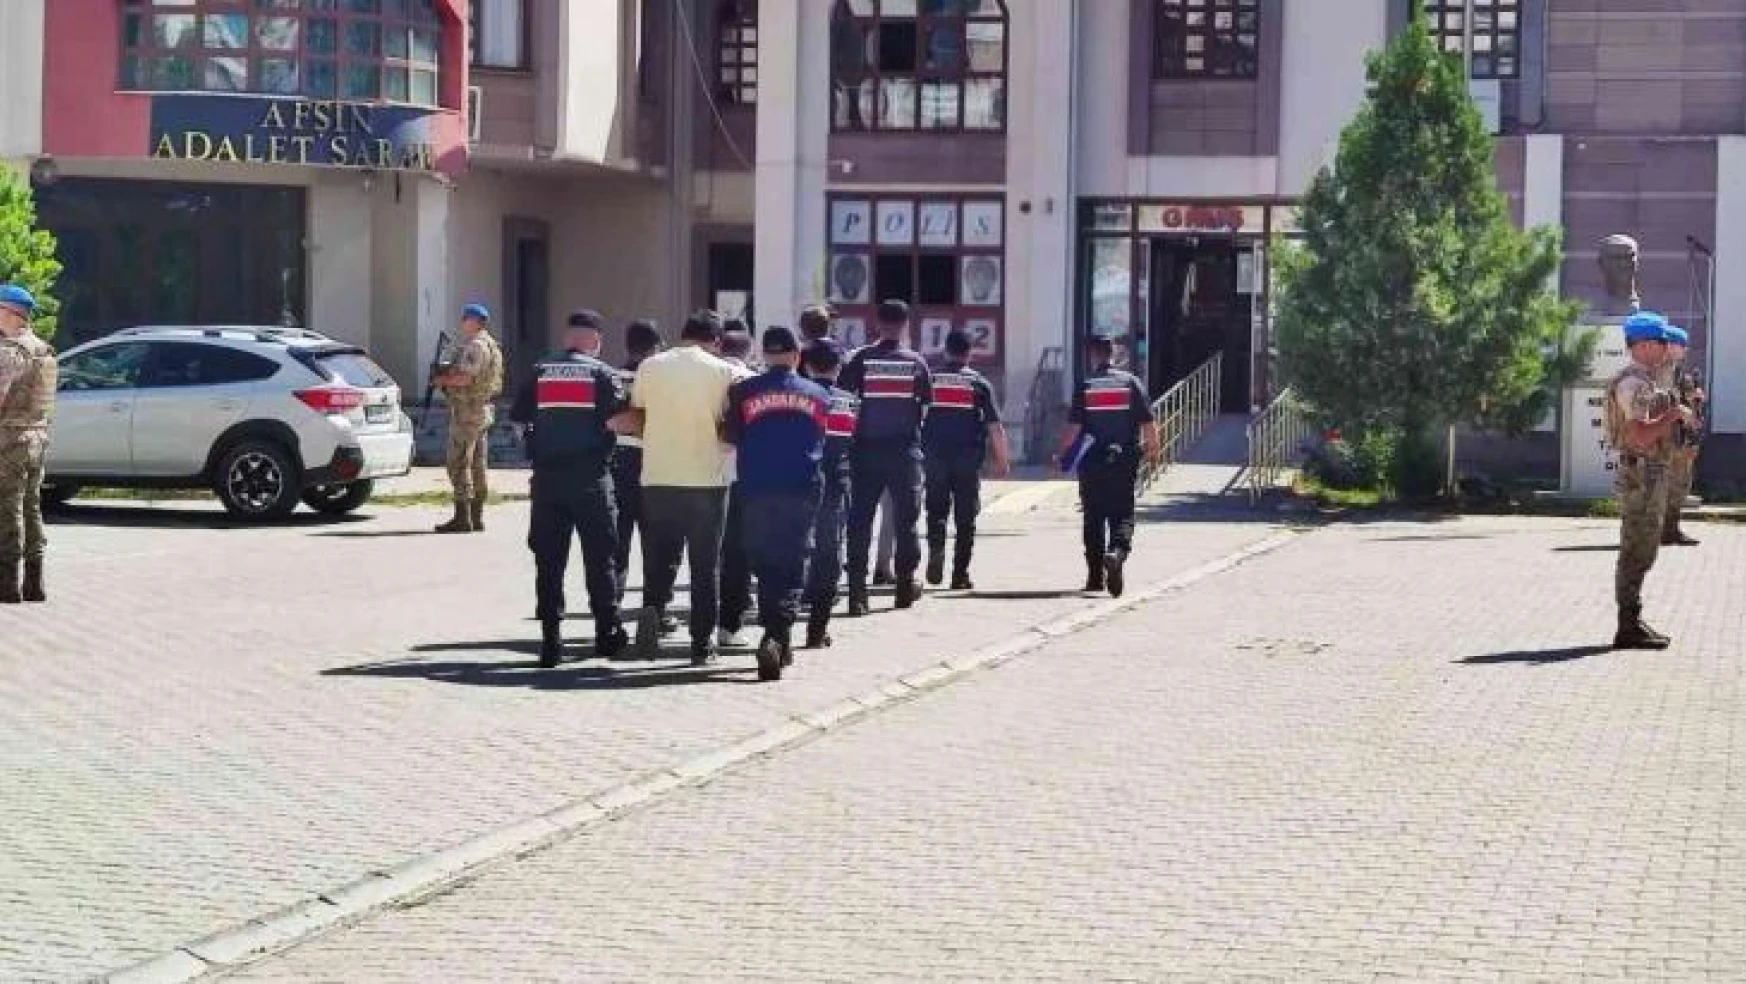 Kahramanmaraş'ta uyuşturucuya 4 tutuklama